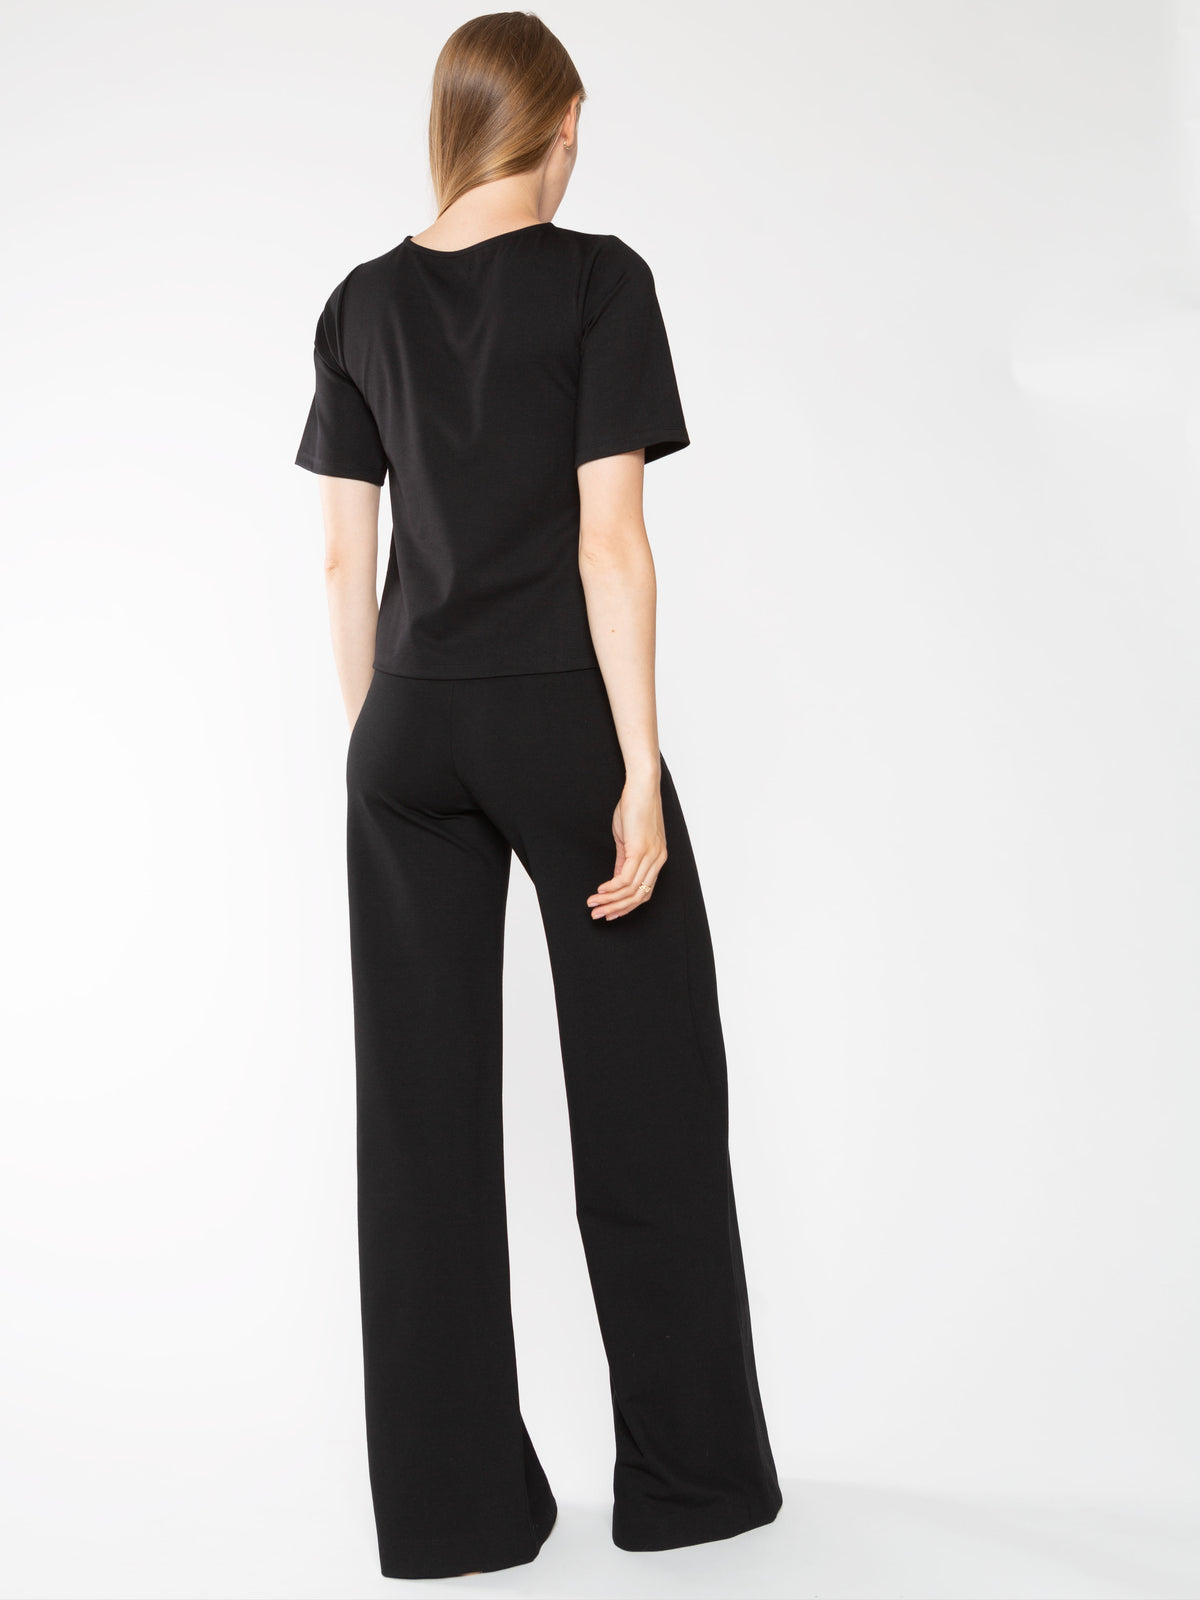 Ripley Rader Ponte Knit Short Sleeve Top Extended - Black